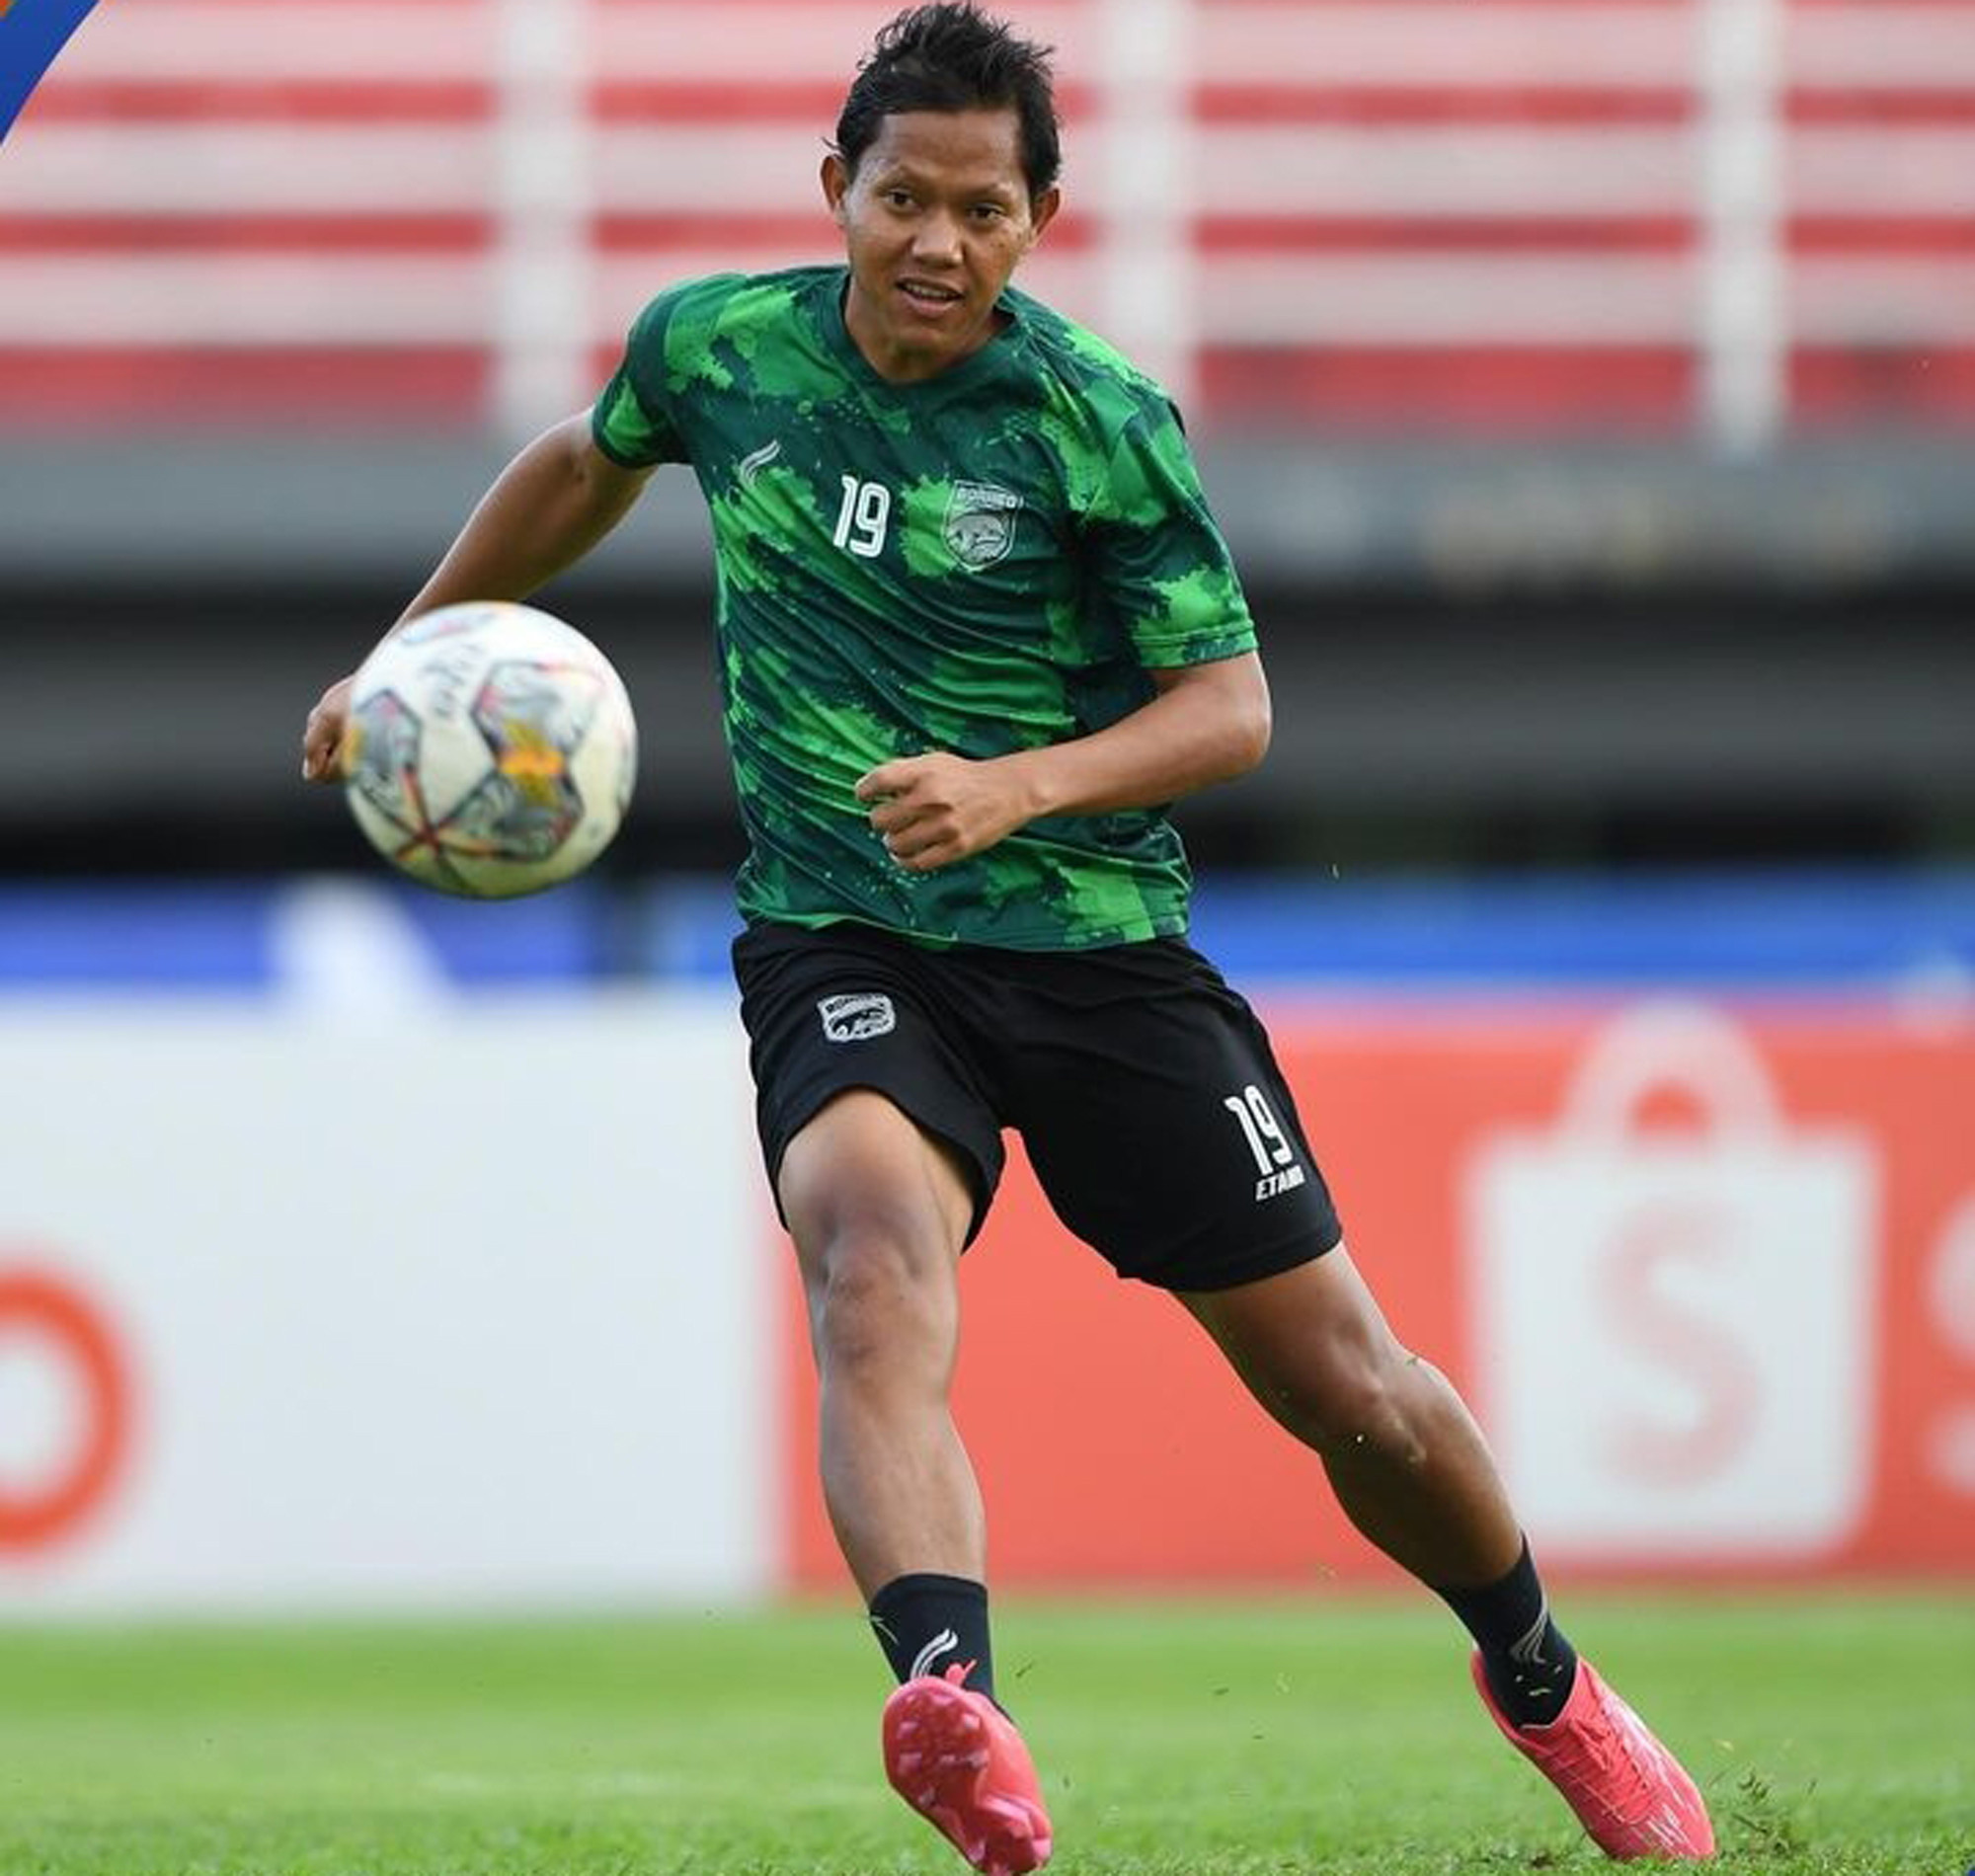  Link Live Streaming Borneo FC vs Persik, Menanti Pesut Etam Menang Lagi! - JPNN.com Kaltim